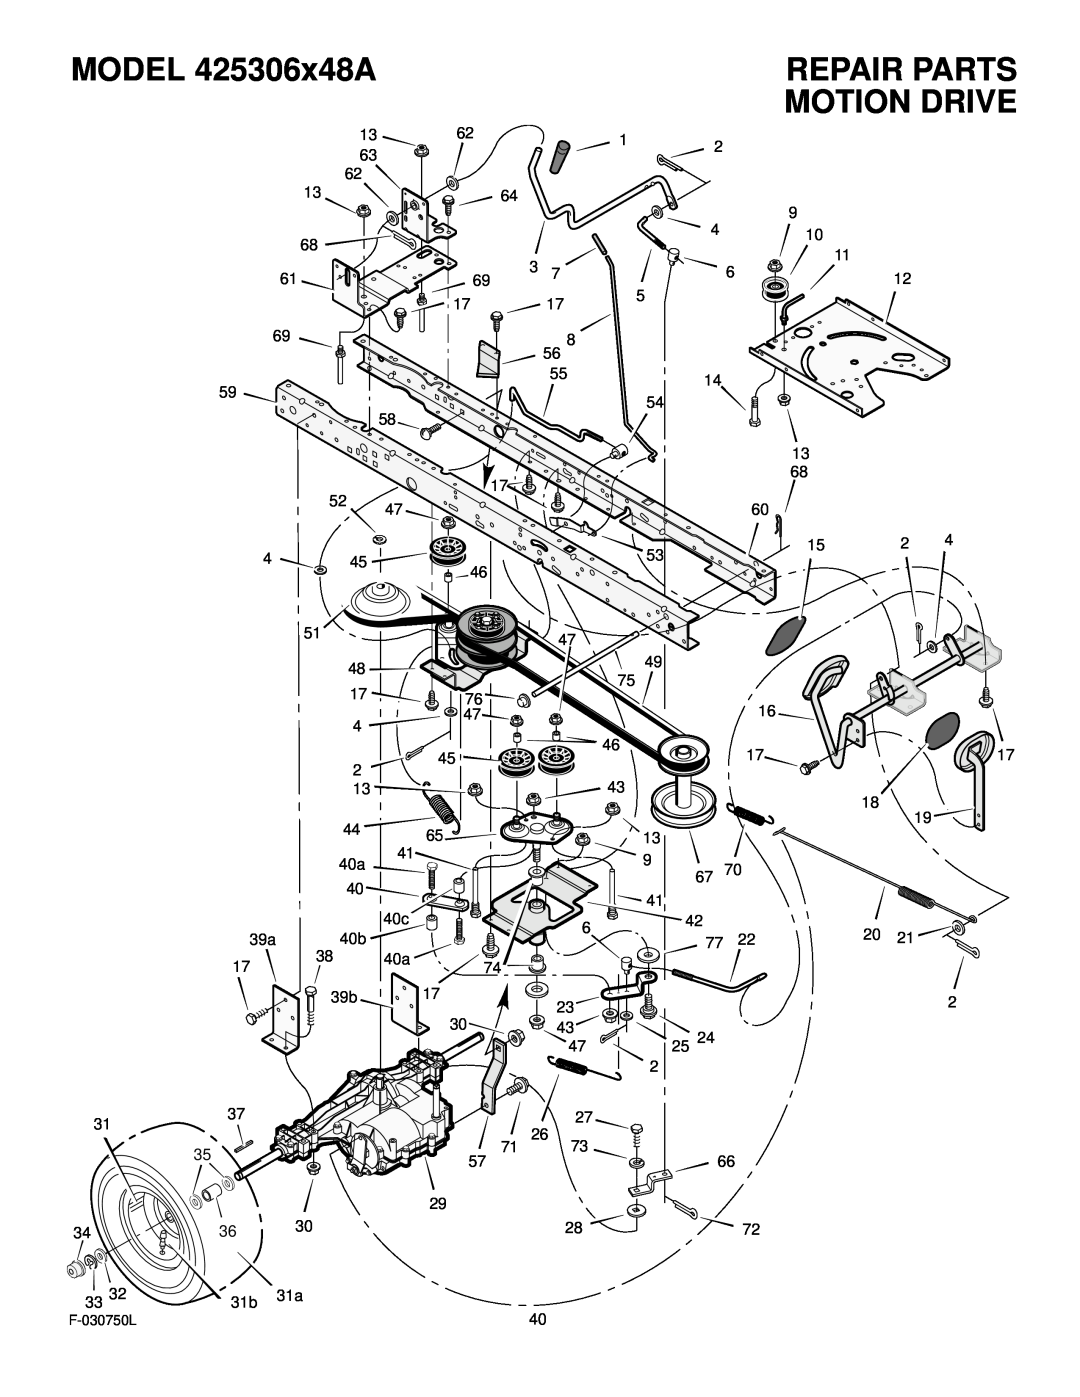 Murray manual Motion Drive, MODEL 425306x48A, Repair Parts 